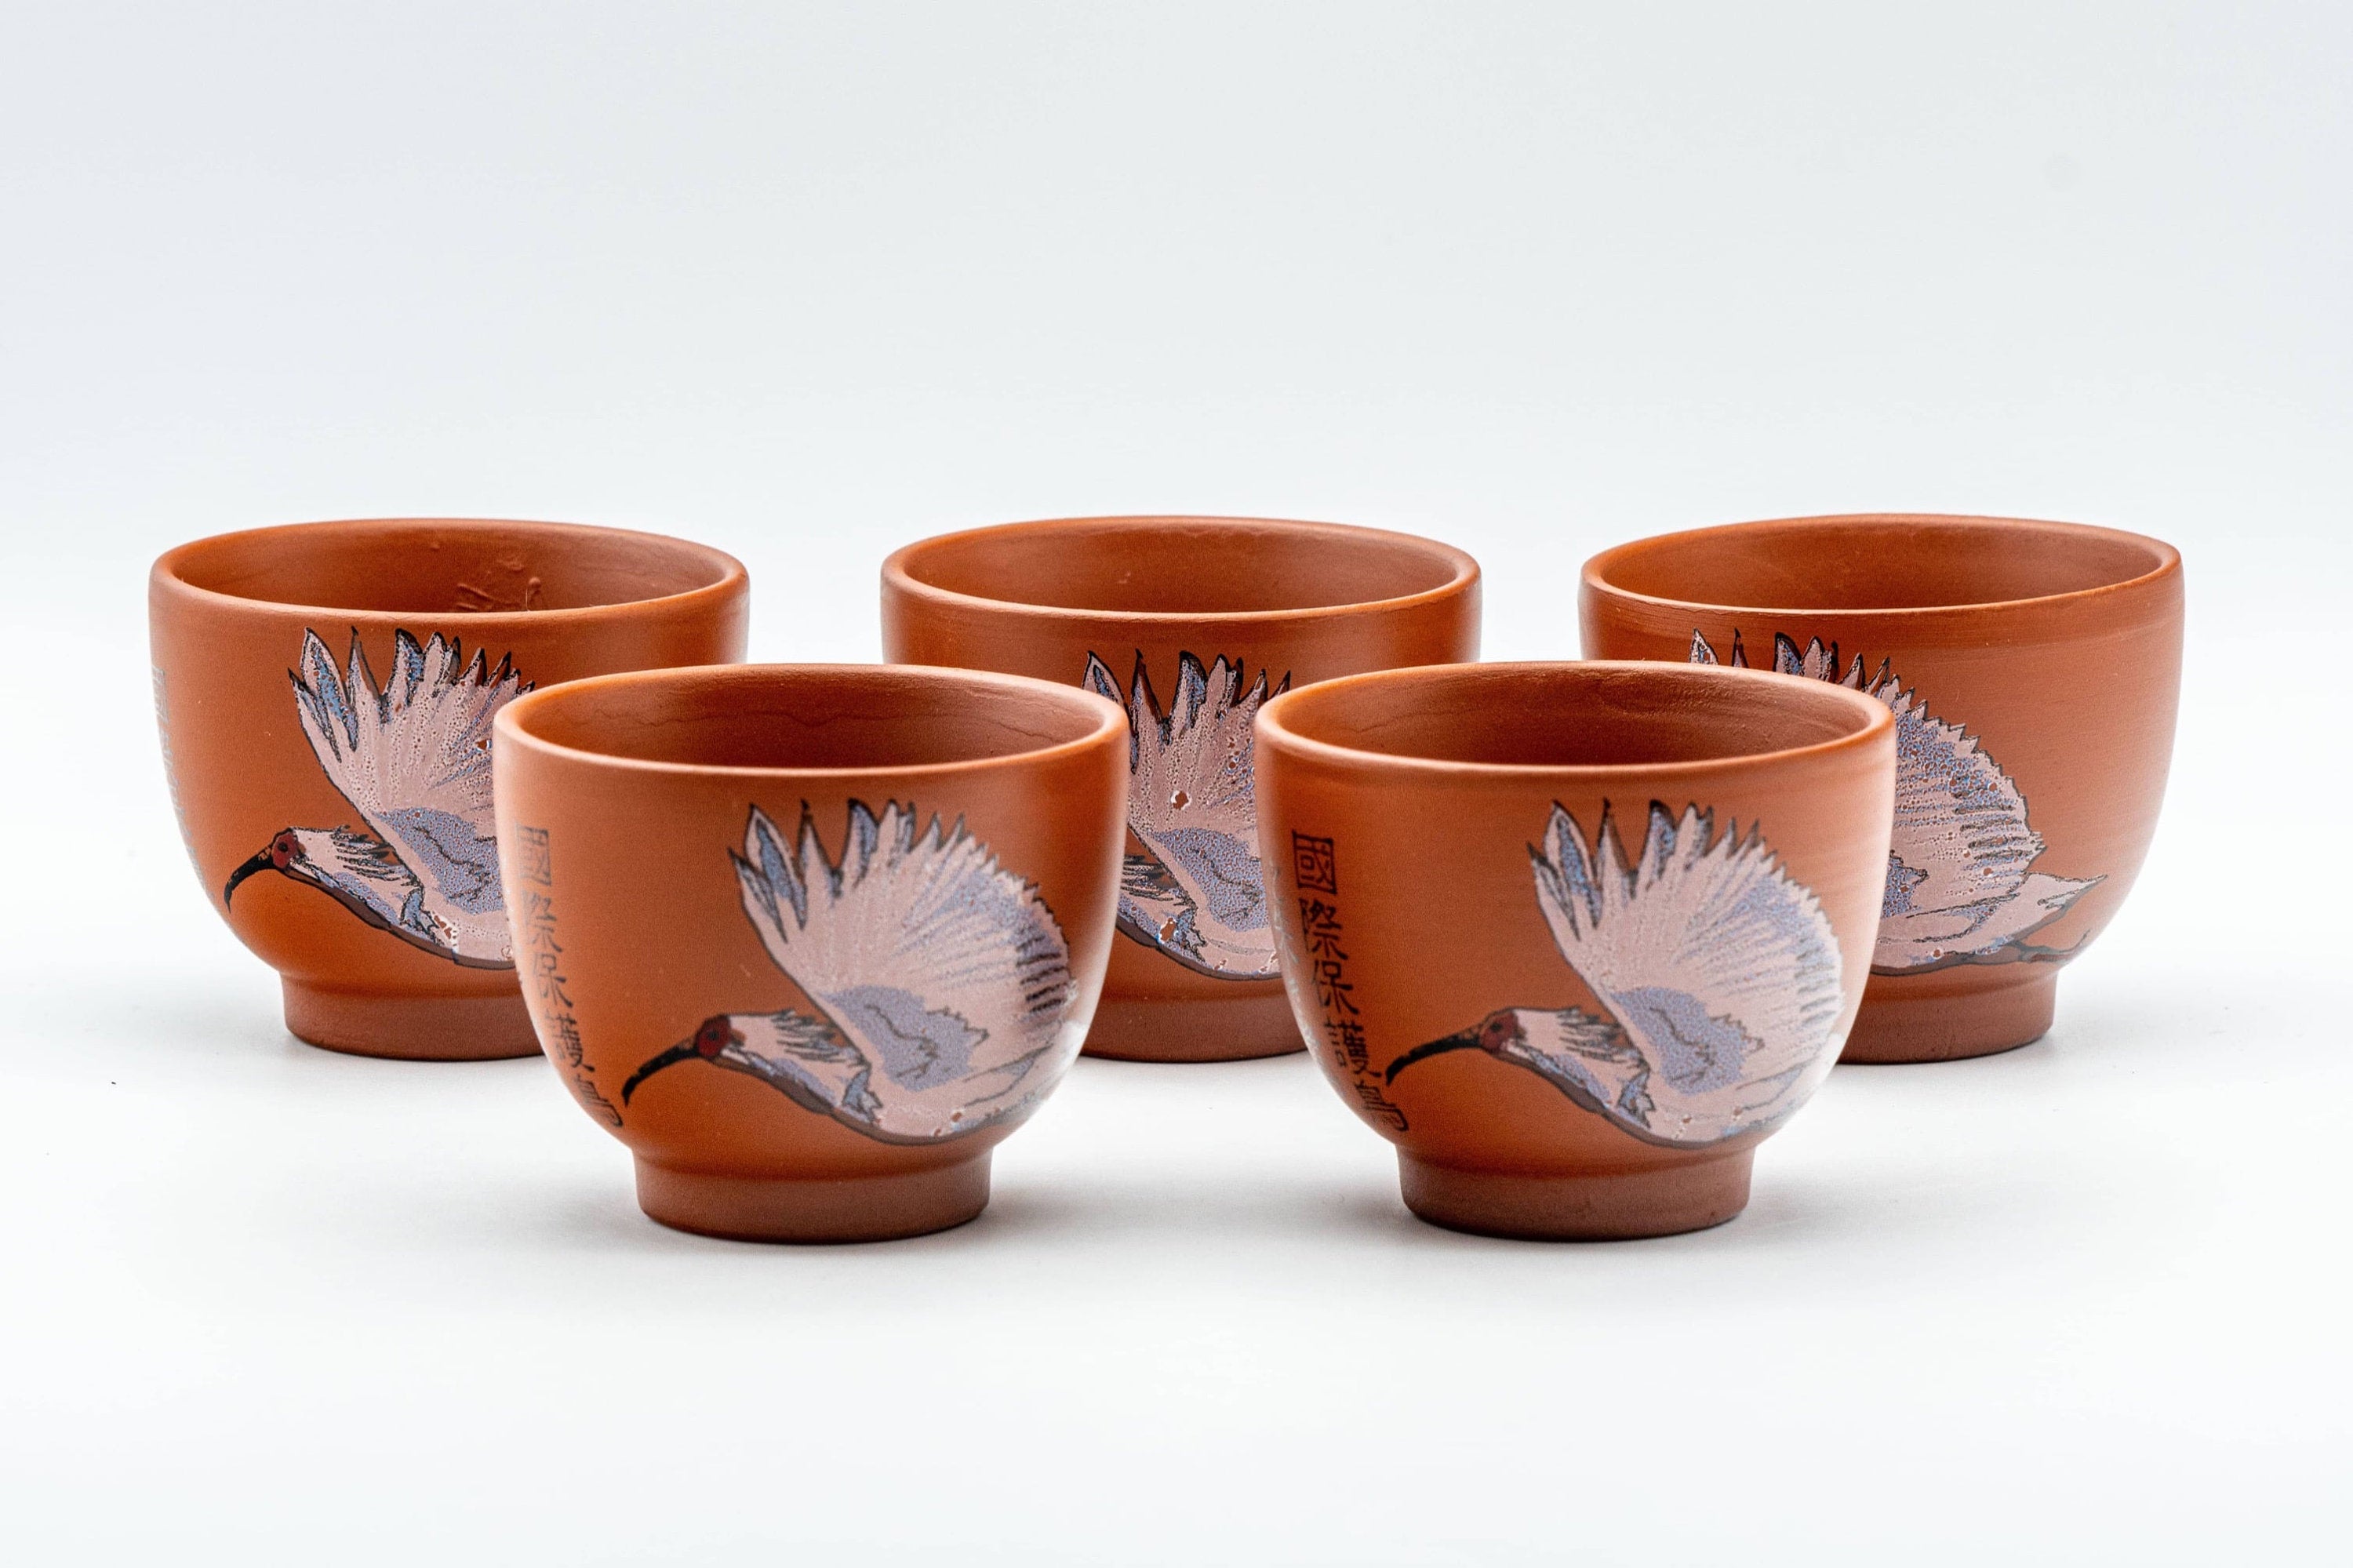 Japanese Teacups - Set of 5 國際保護 朱鷺 とき Crested Ibis Tokoname-yaki Yunomi - 55ml